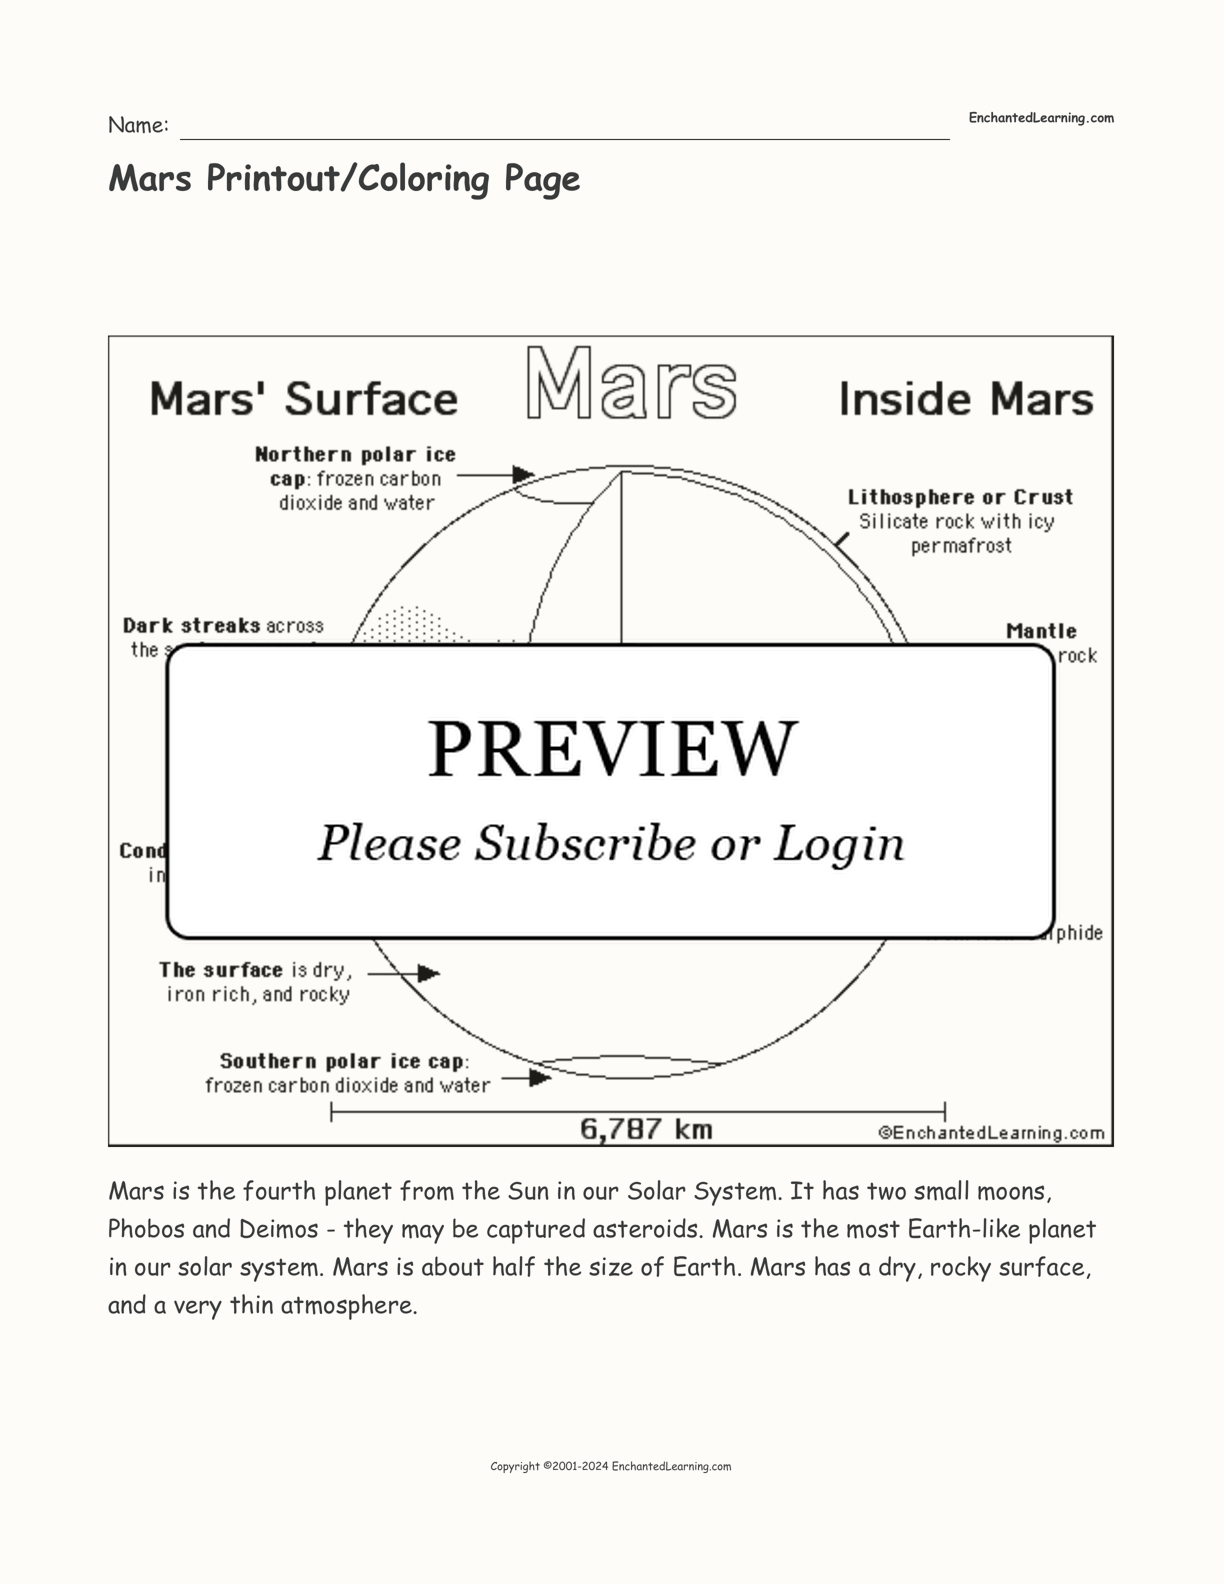 Mars Printout/Coloring Page interactive printout page 1